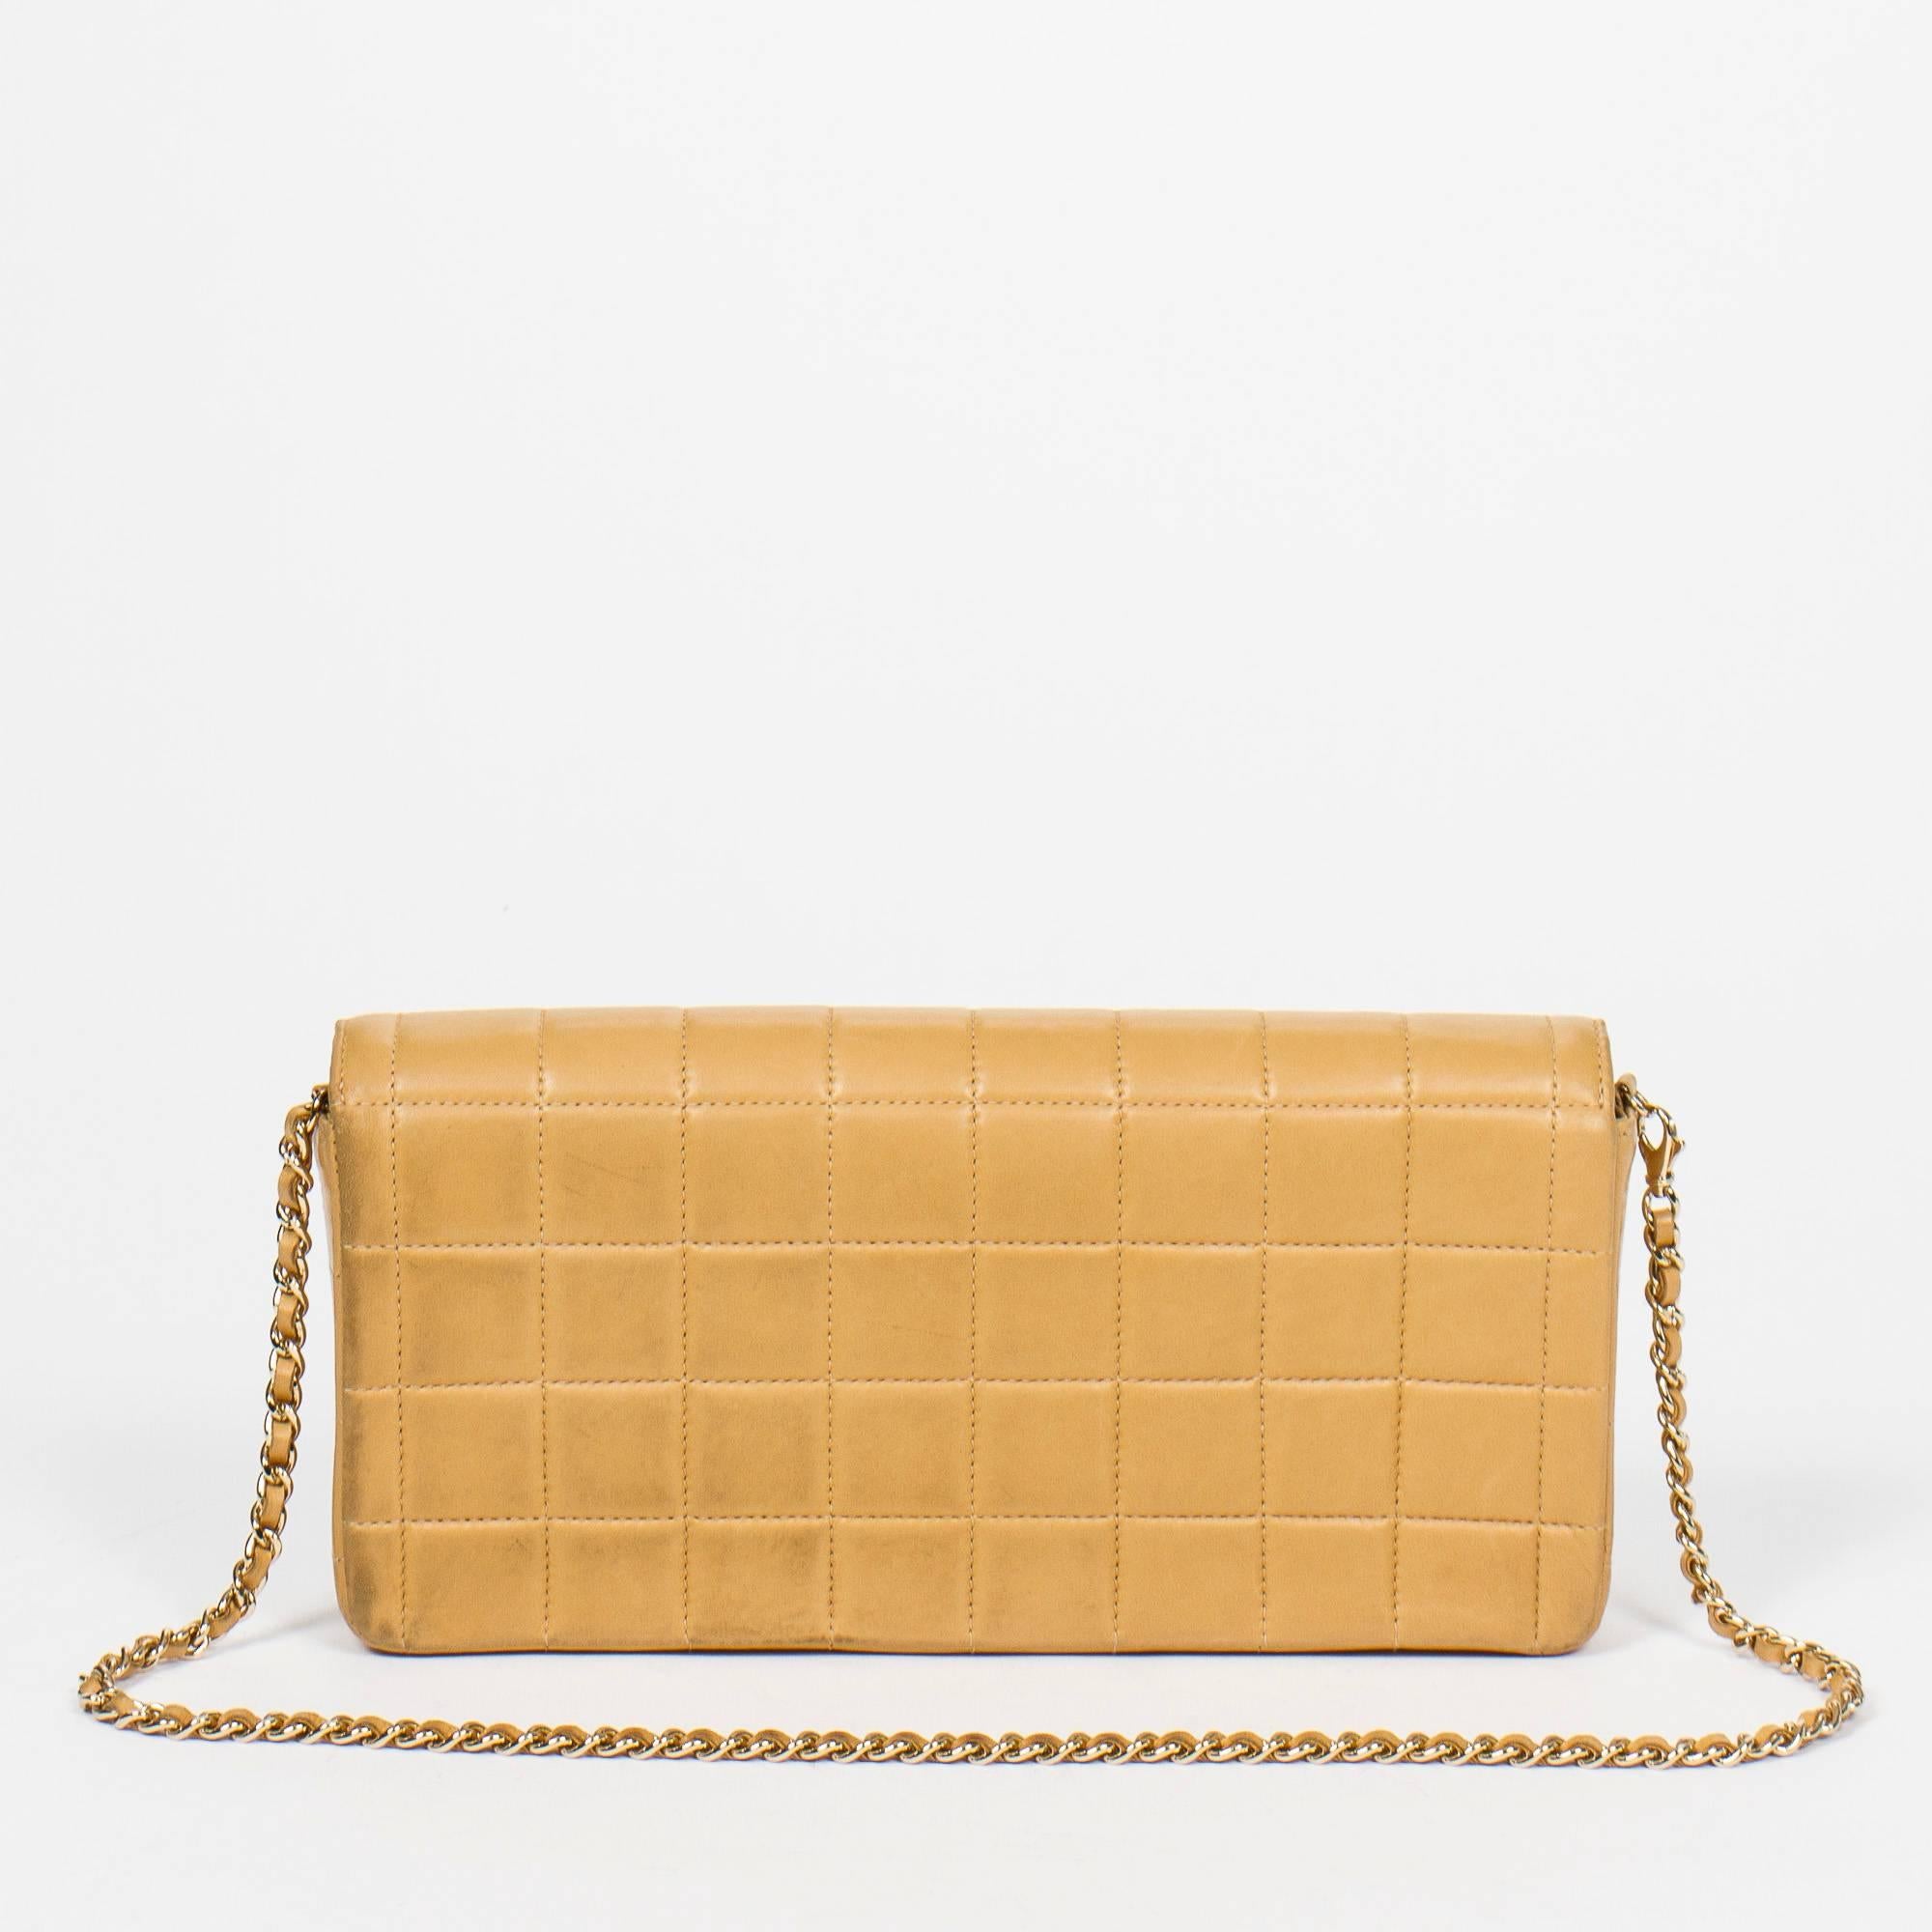 Women's Shoulder bag Chanel Eastwest Flap in beige leather